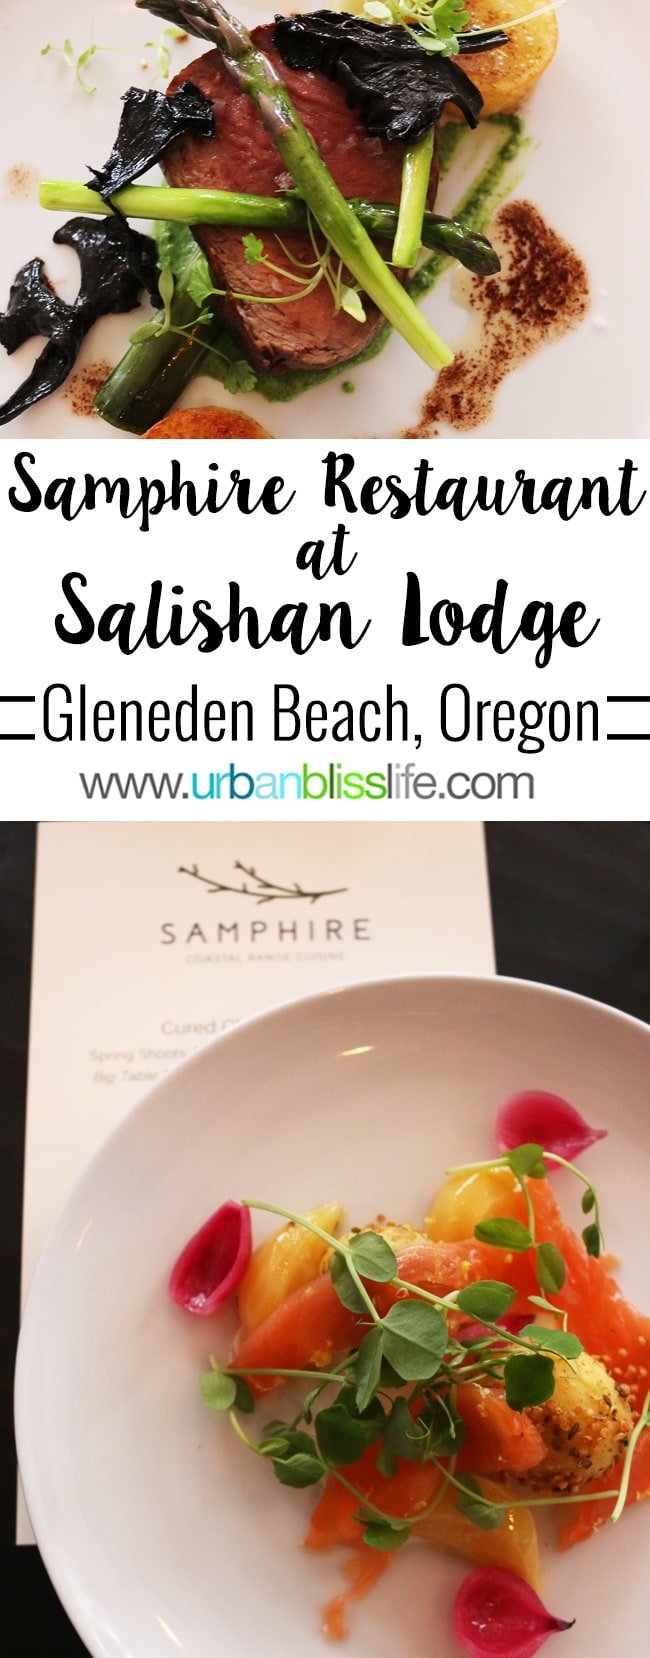 Salishan Lodge: Samphire Restaurant review on UrbanBlissLife.com